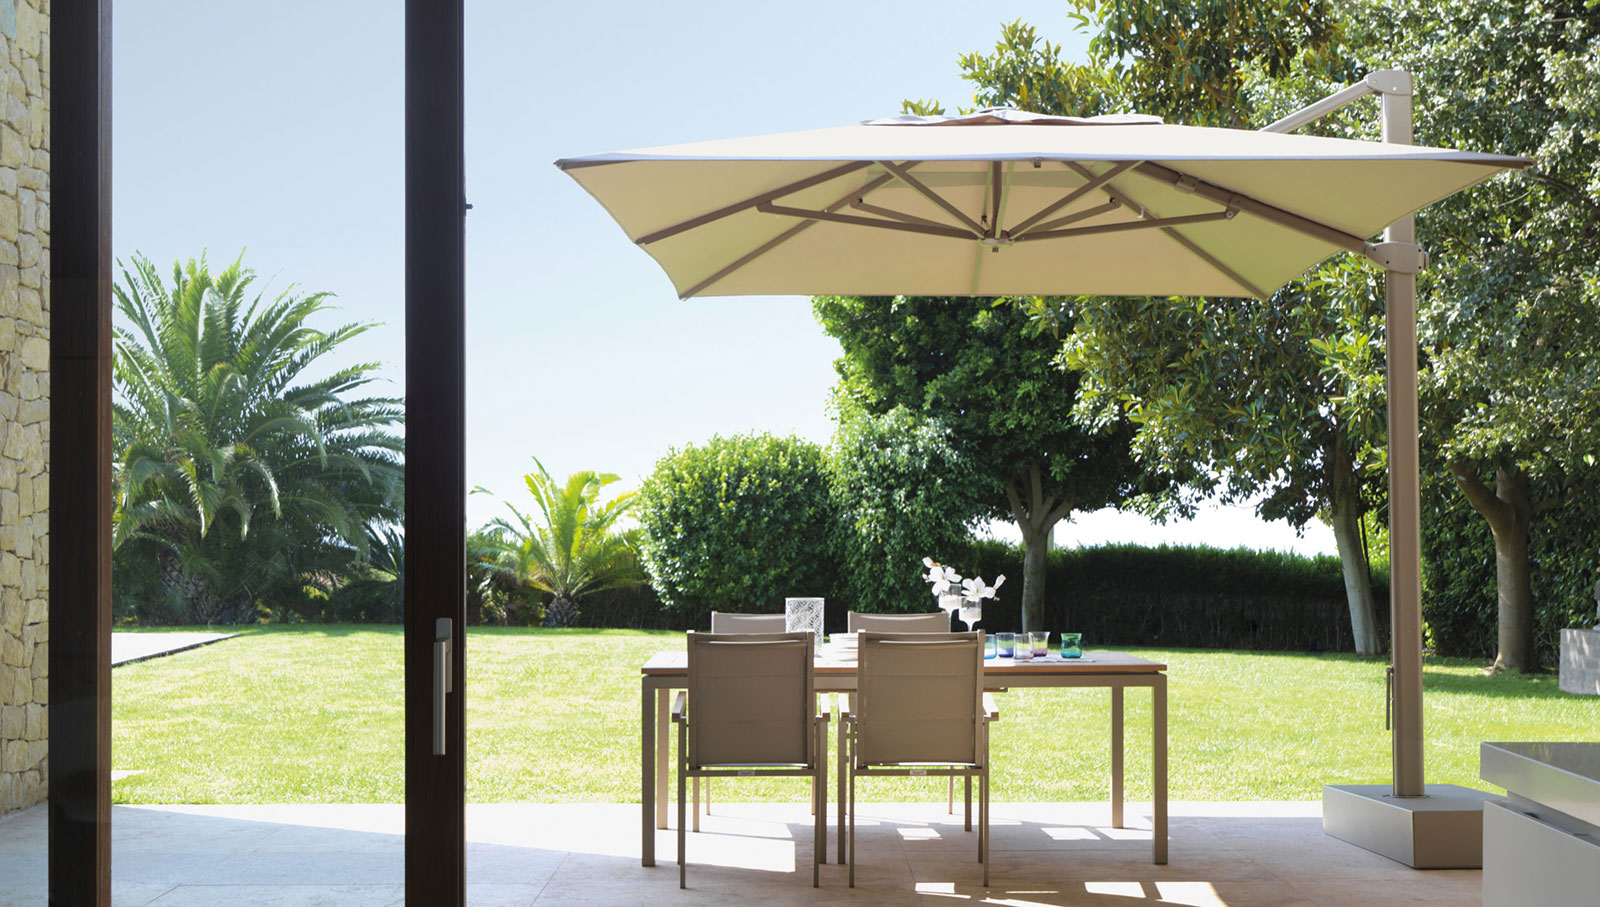 Vier voor kwaliteit Atene 3x4 decentralized parasol - Shop Online | Italy Dream Design